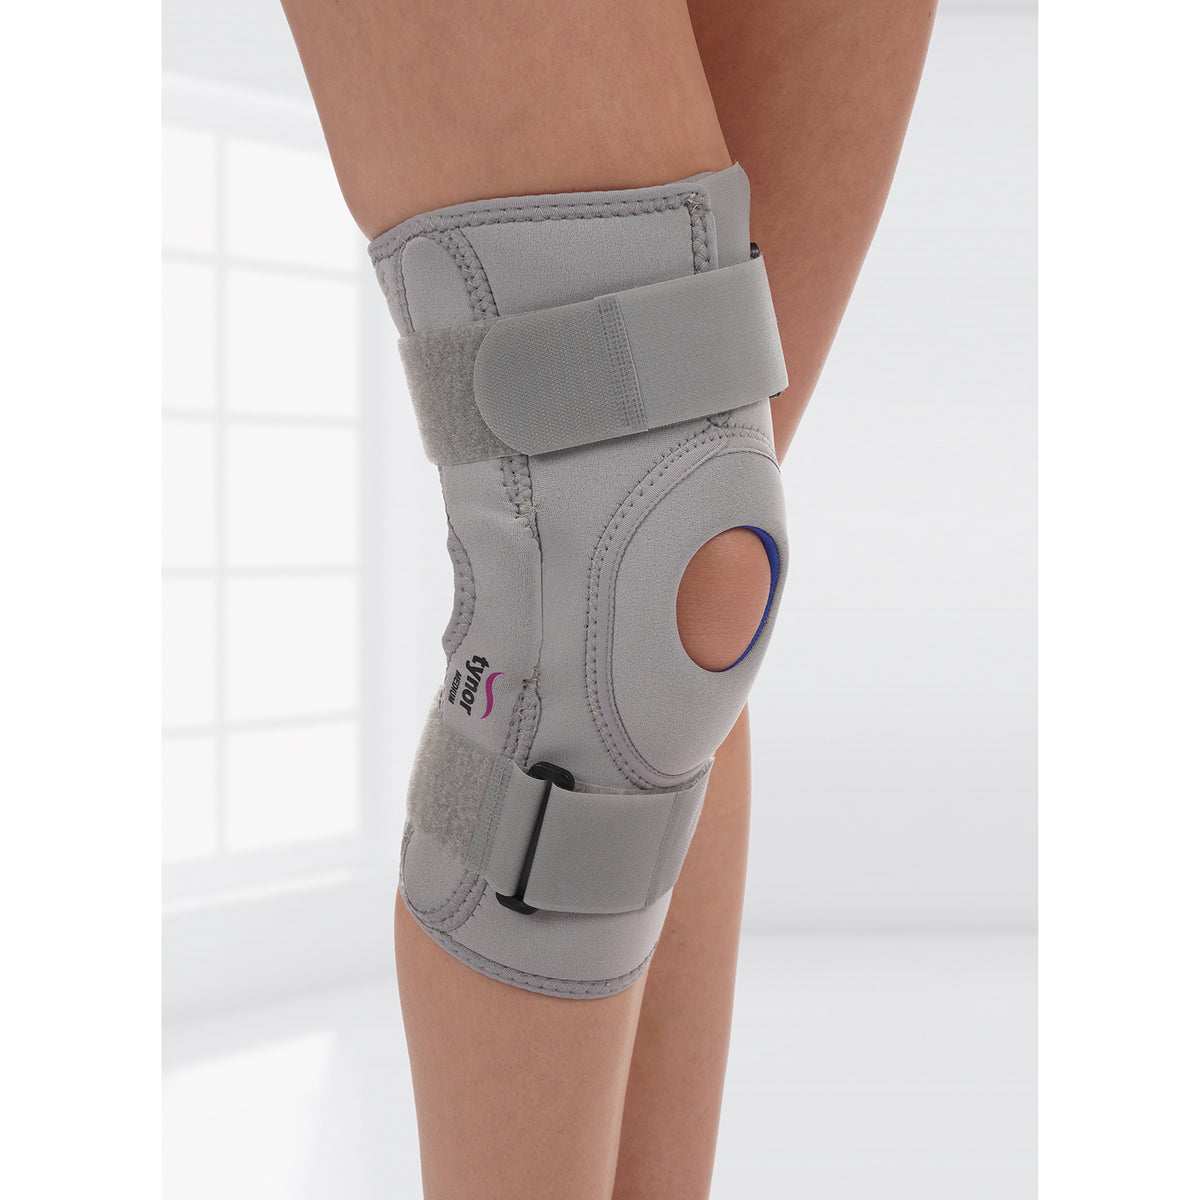 Neoprene Hinged knee support in grey color-6